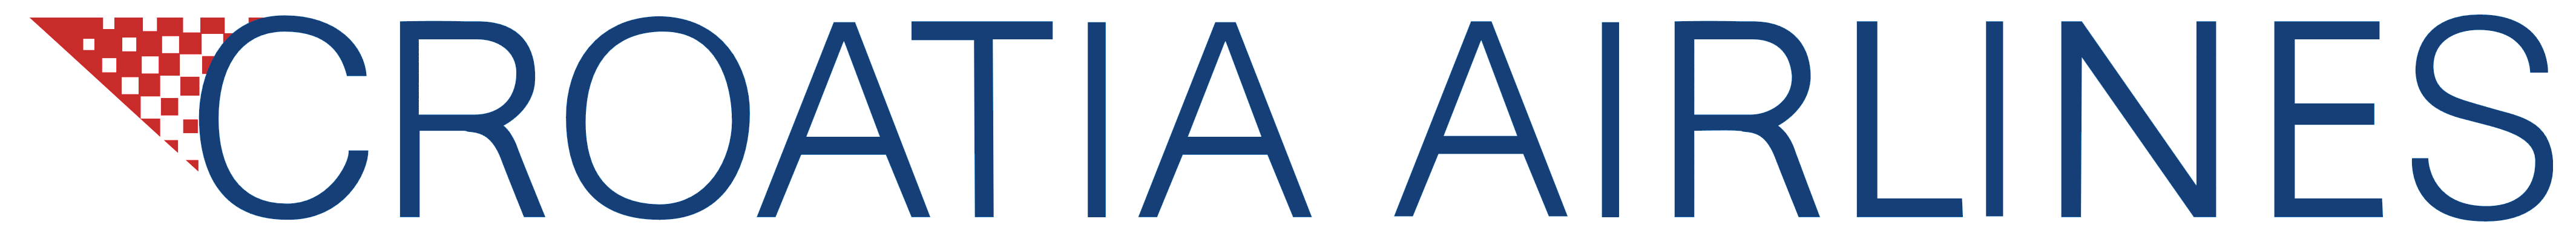 Croatia Airlines logo, logotype